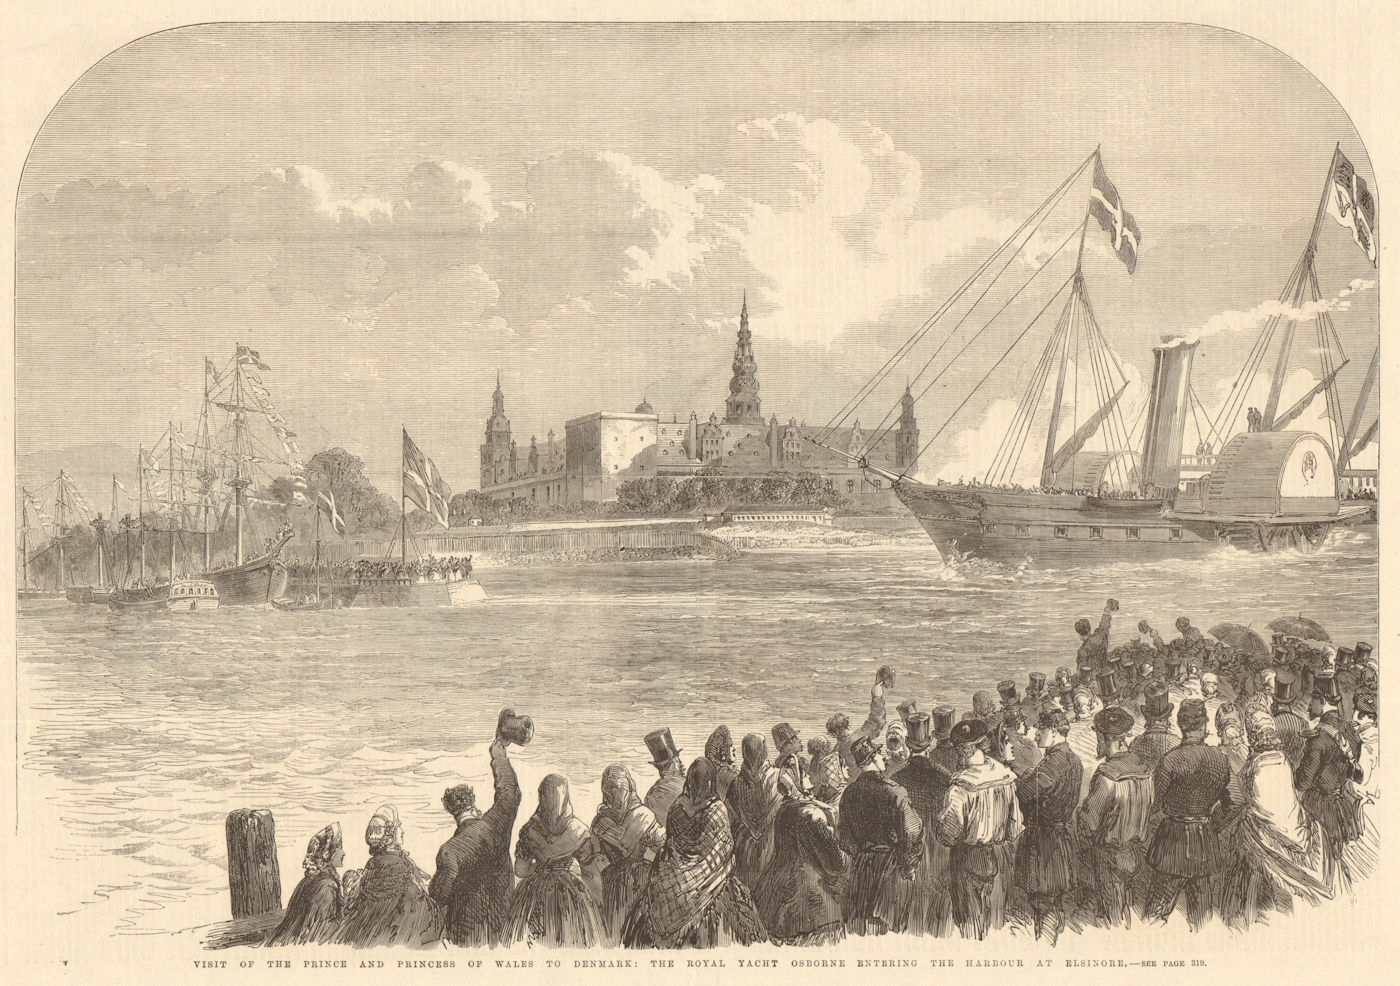 Associate Product The Royal Yacht Osborne entering the harbour at Helsingor, Denmark 1864